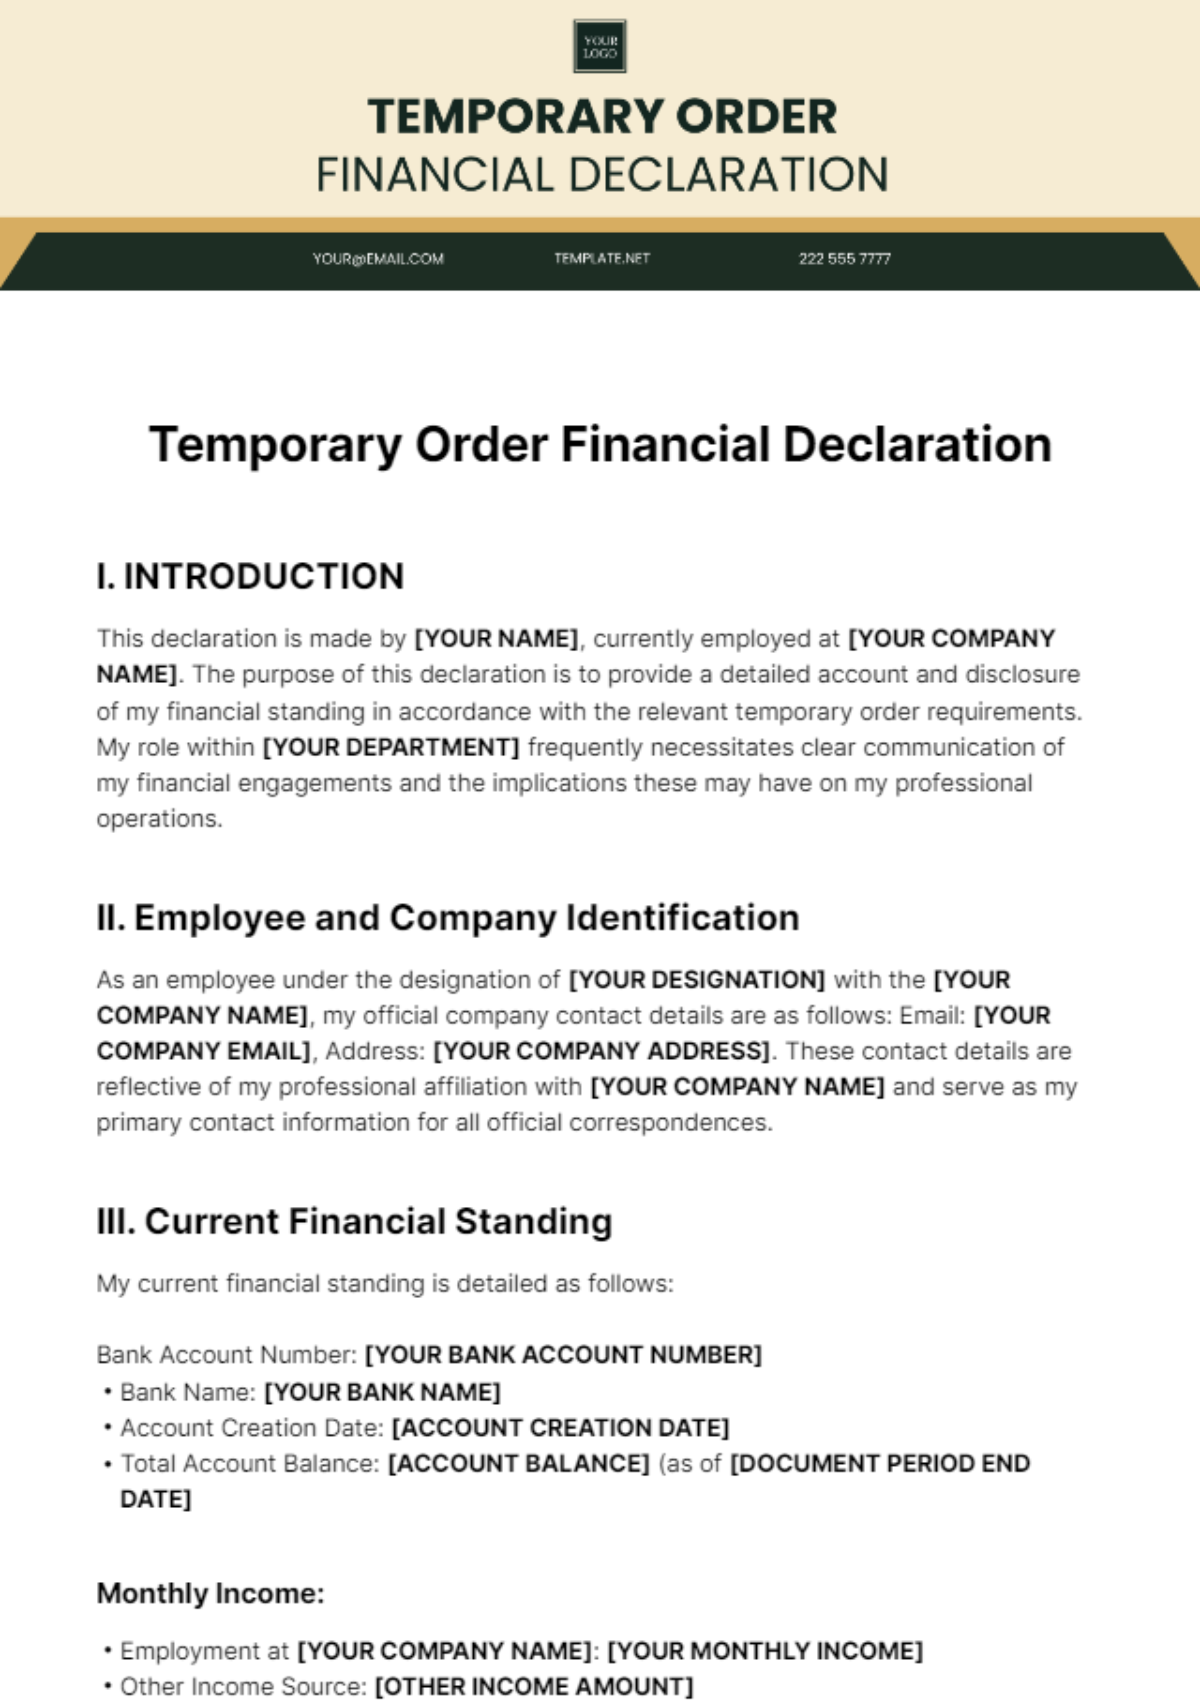 Temporary Order Financial Declaration Template